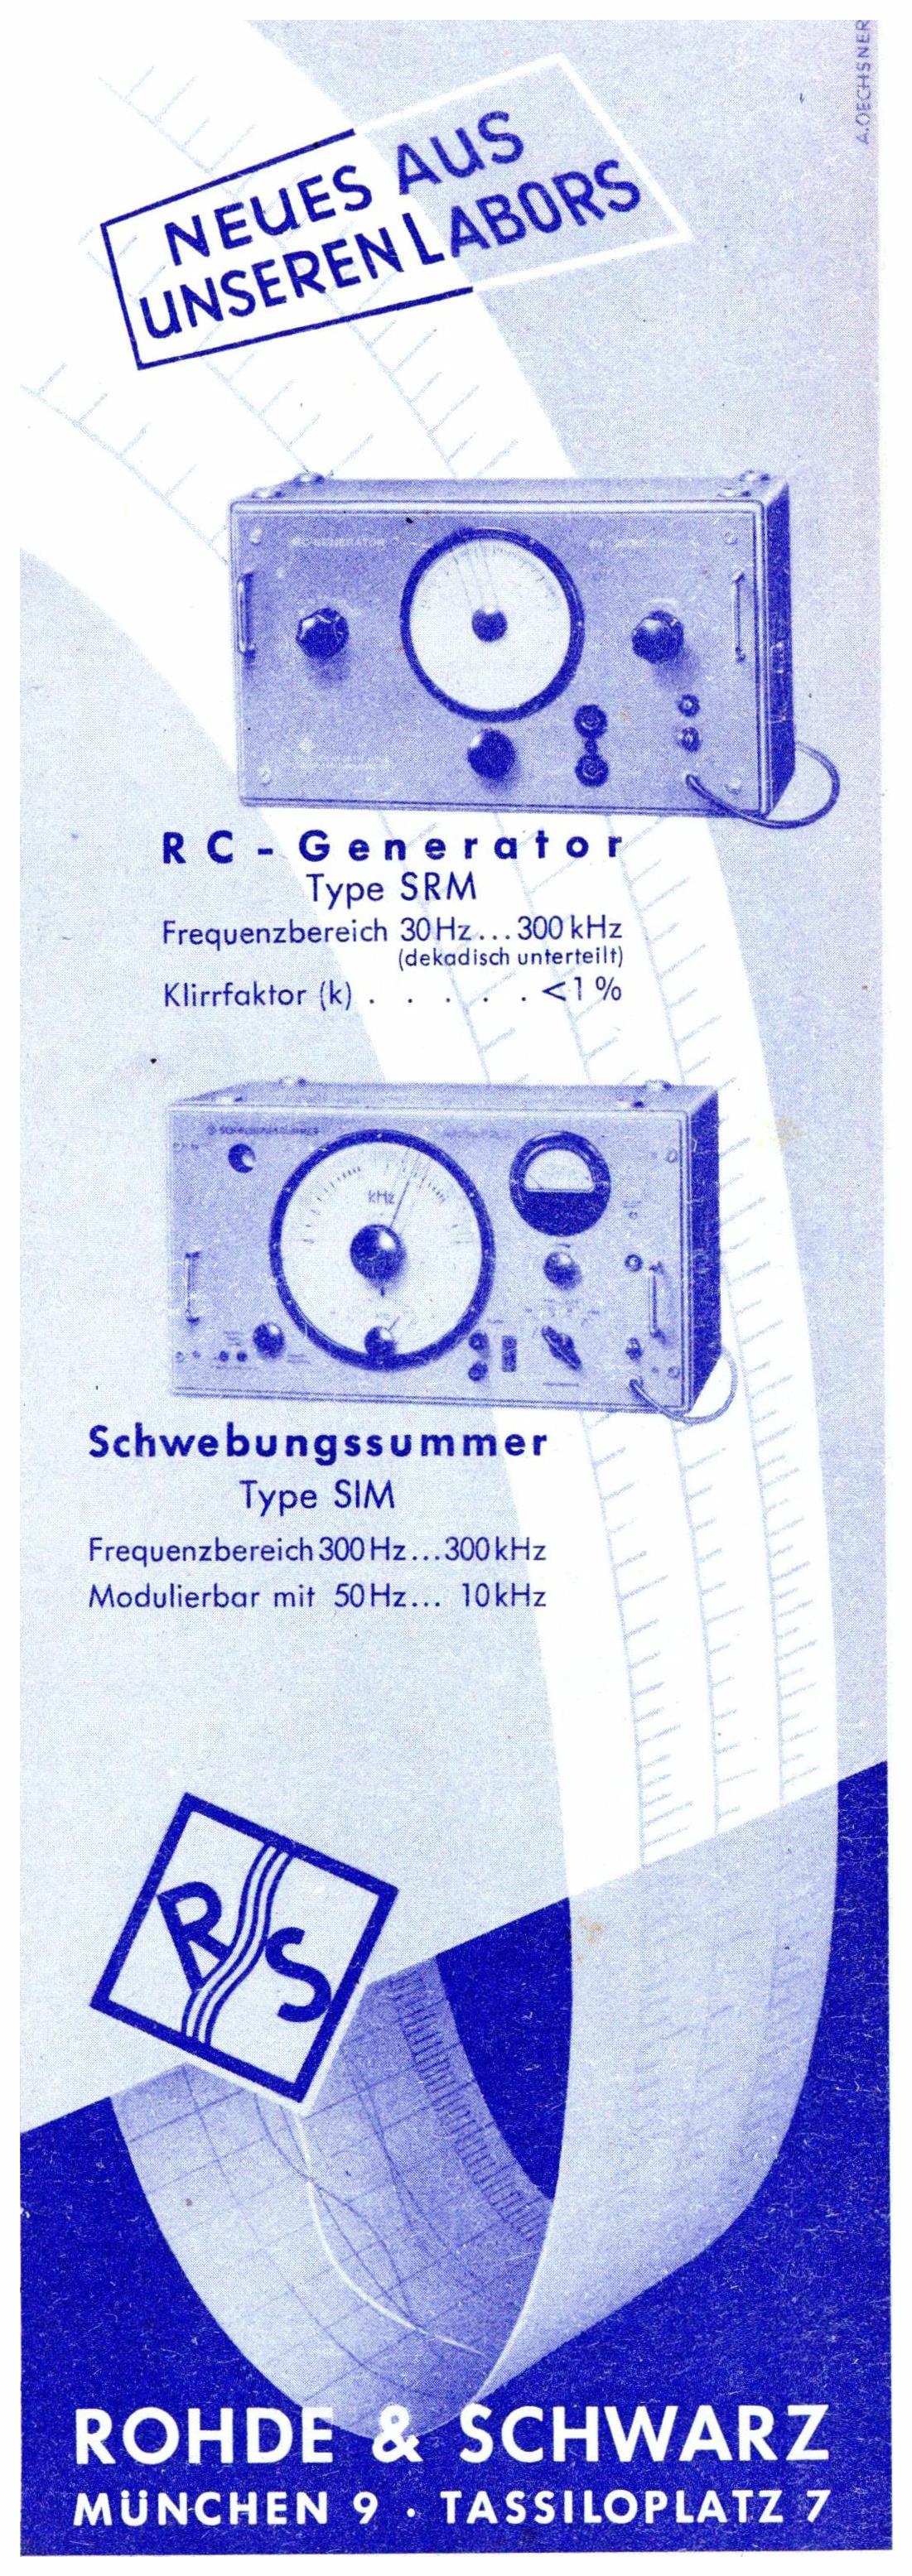 Eohde & Schwarz 1952 1.jpg